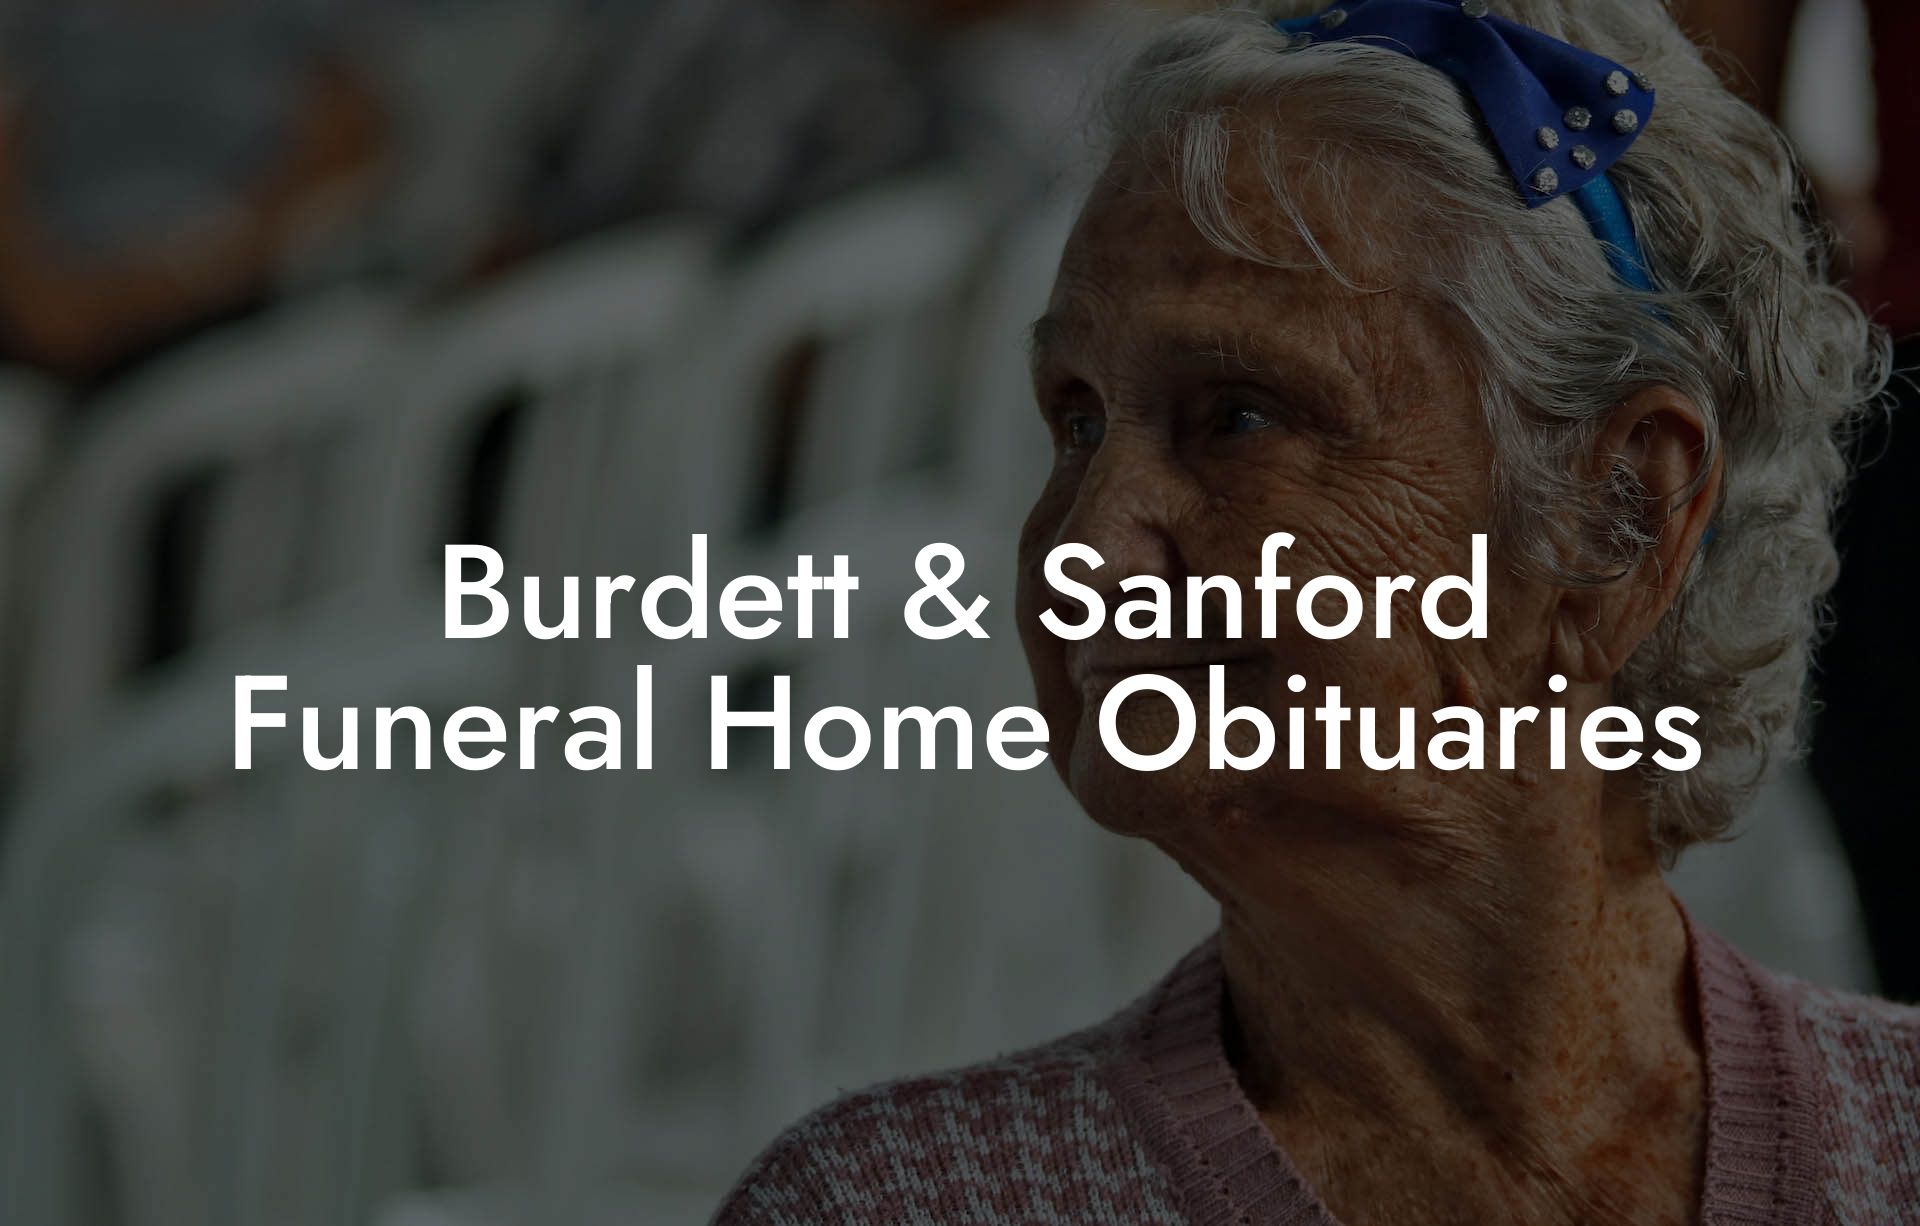 Burdett & Sanford Funeral Home Obituaries